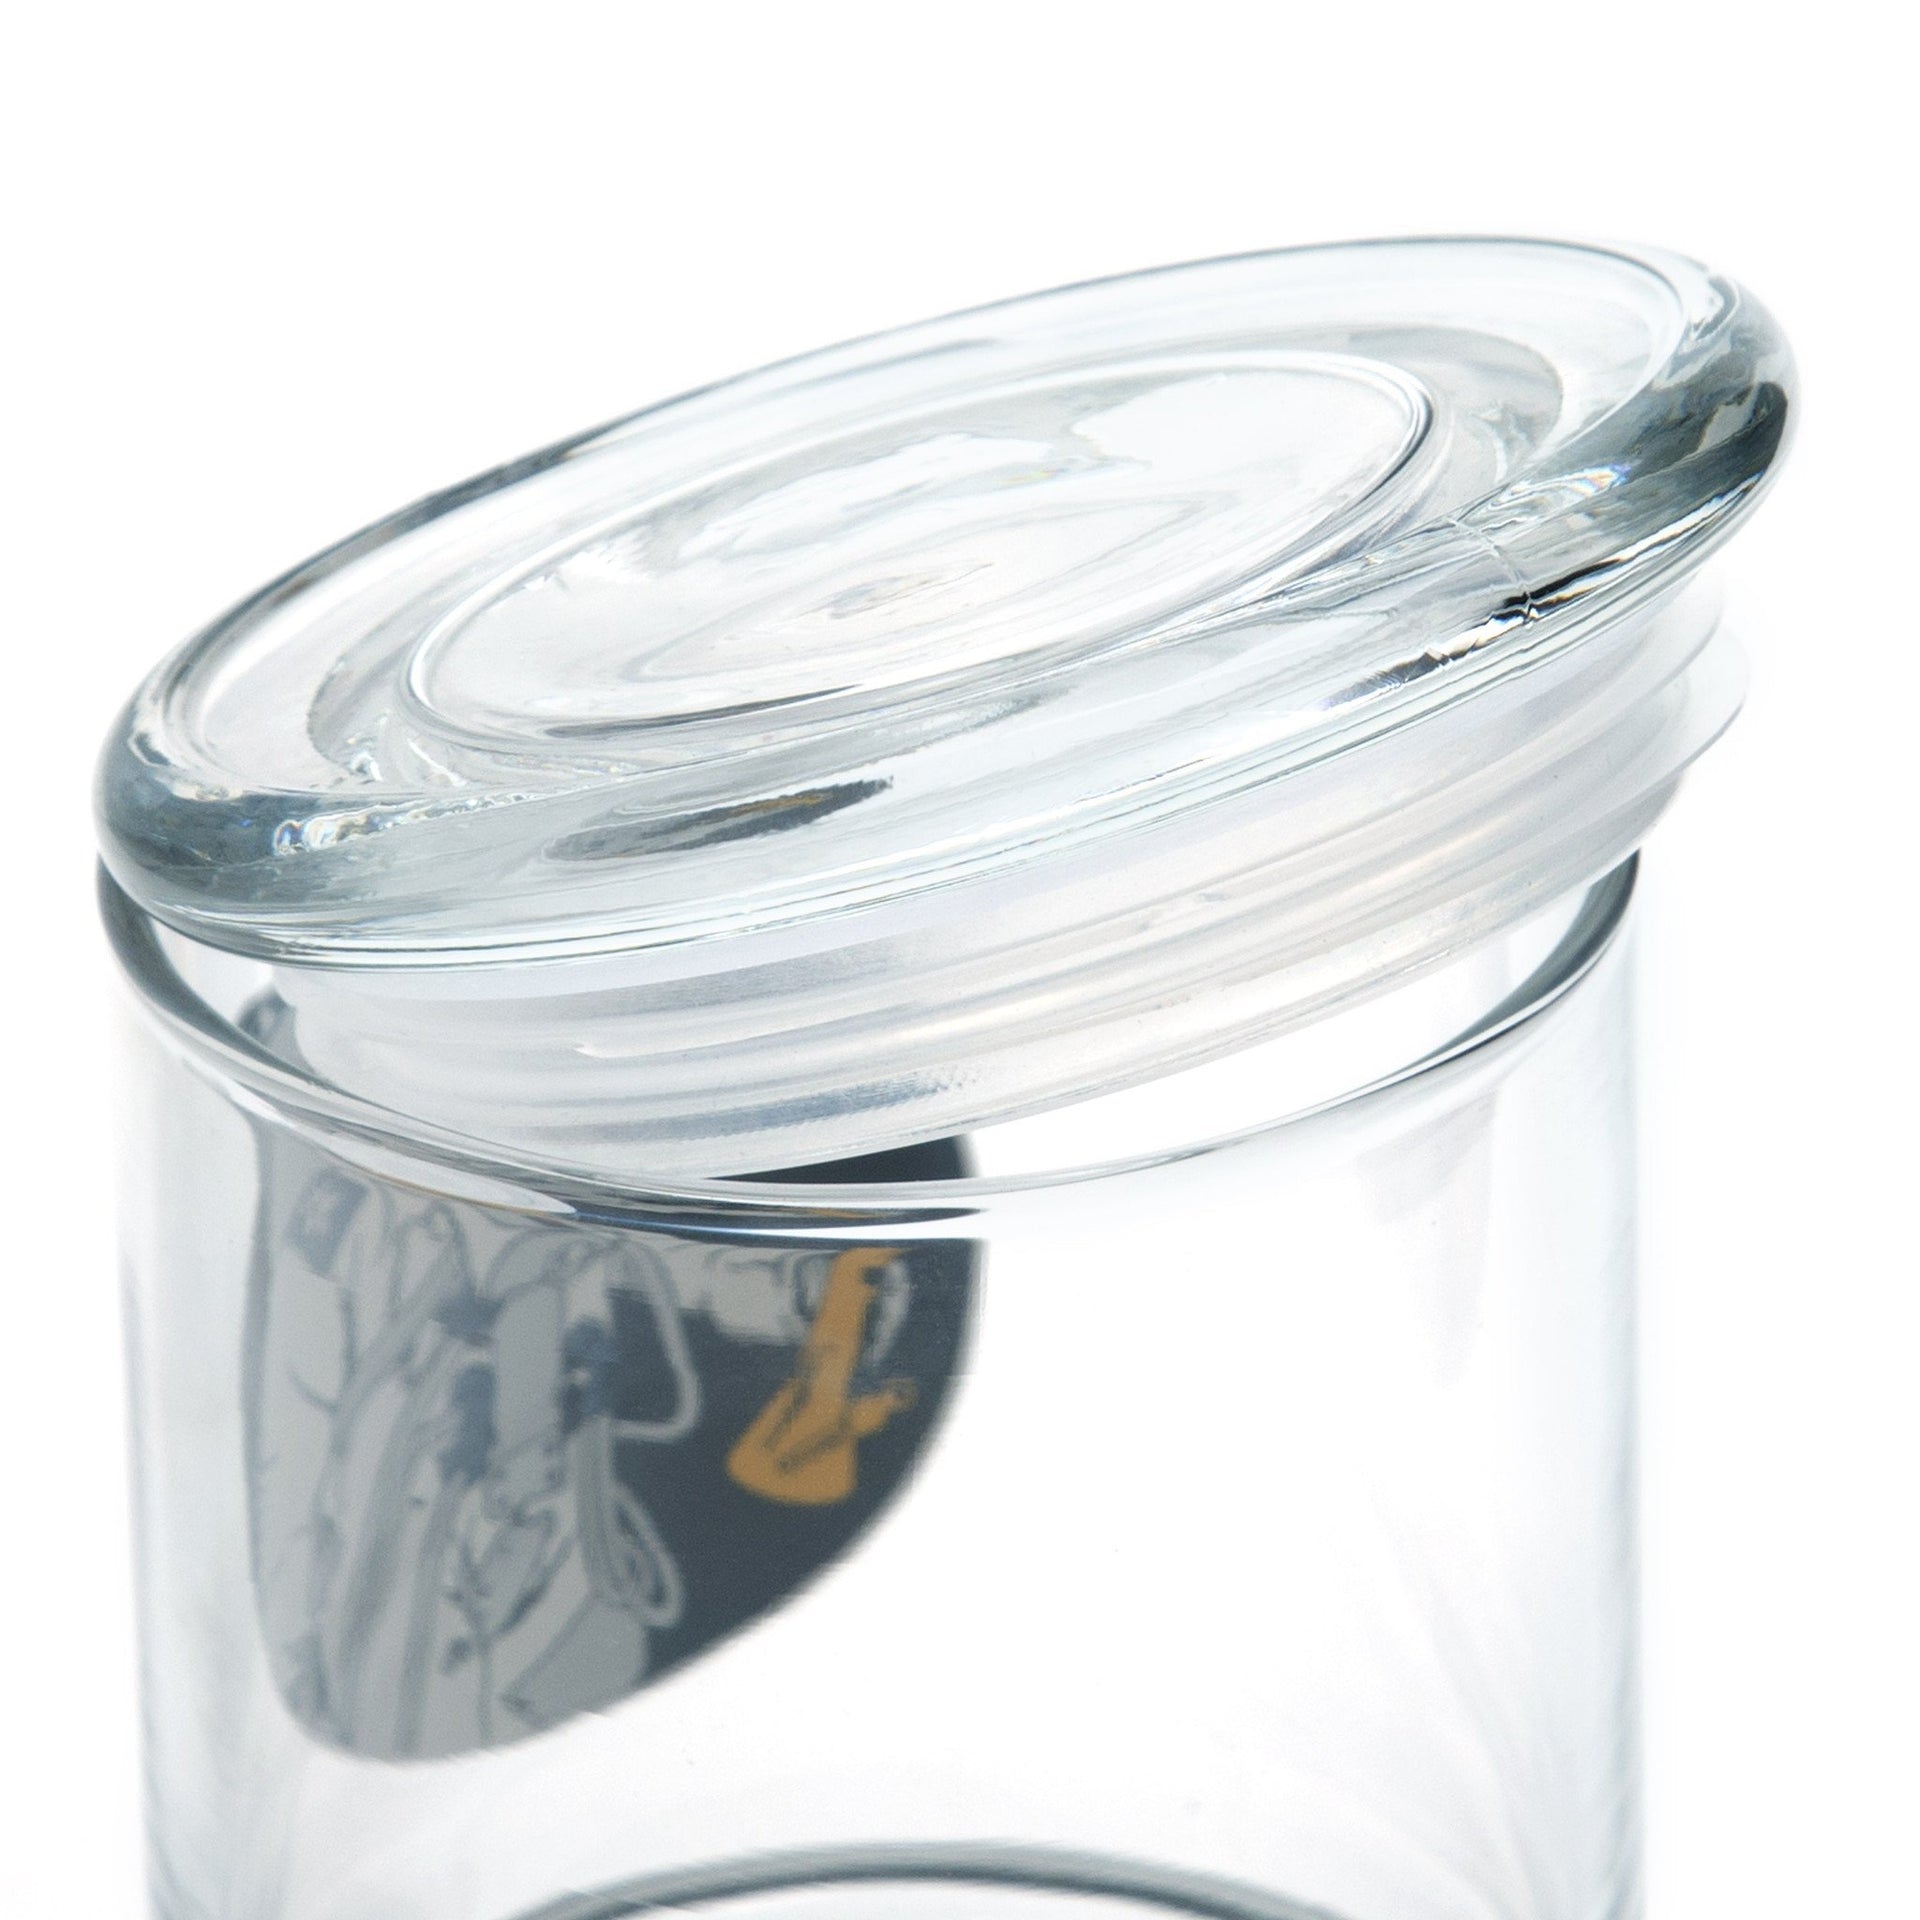 Jar Pop - Glass Jar Top Remover